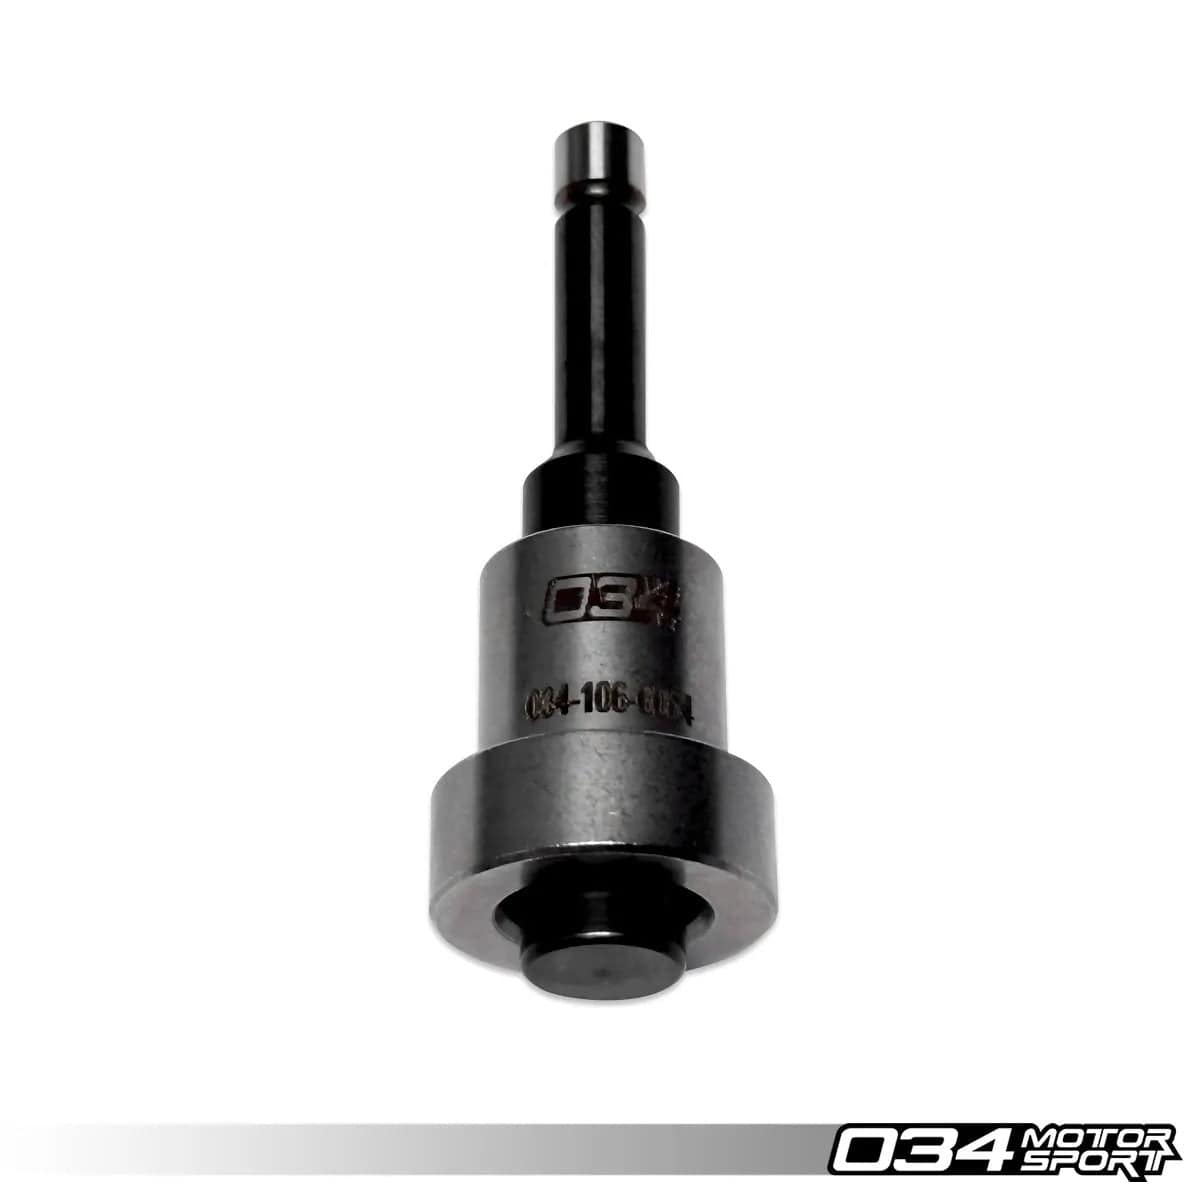 034 Motorsport High Pressure Fuel Pump Piston Upgrade Kit - Audi / Porsche / 2.9T / 3.0T TFSI (EA839)